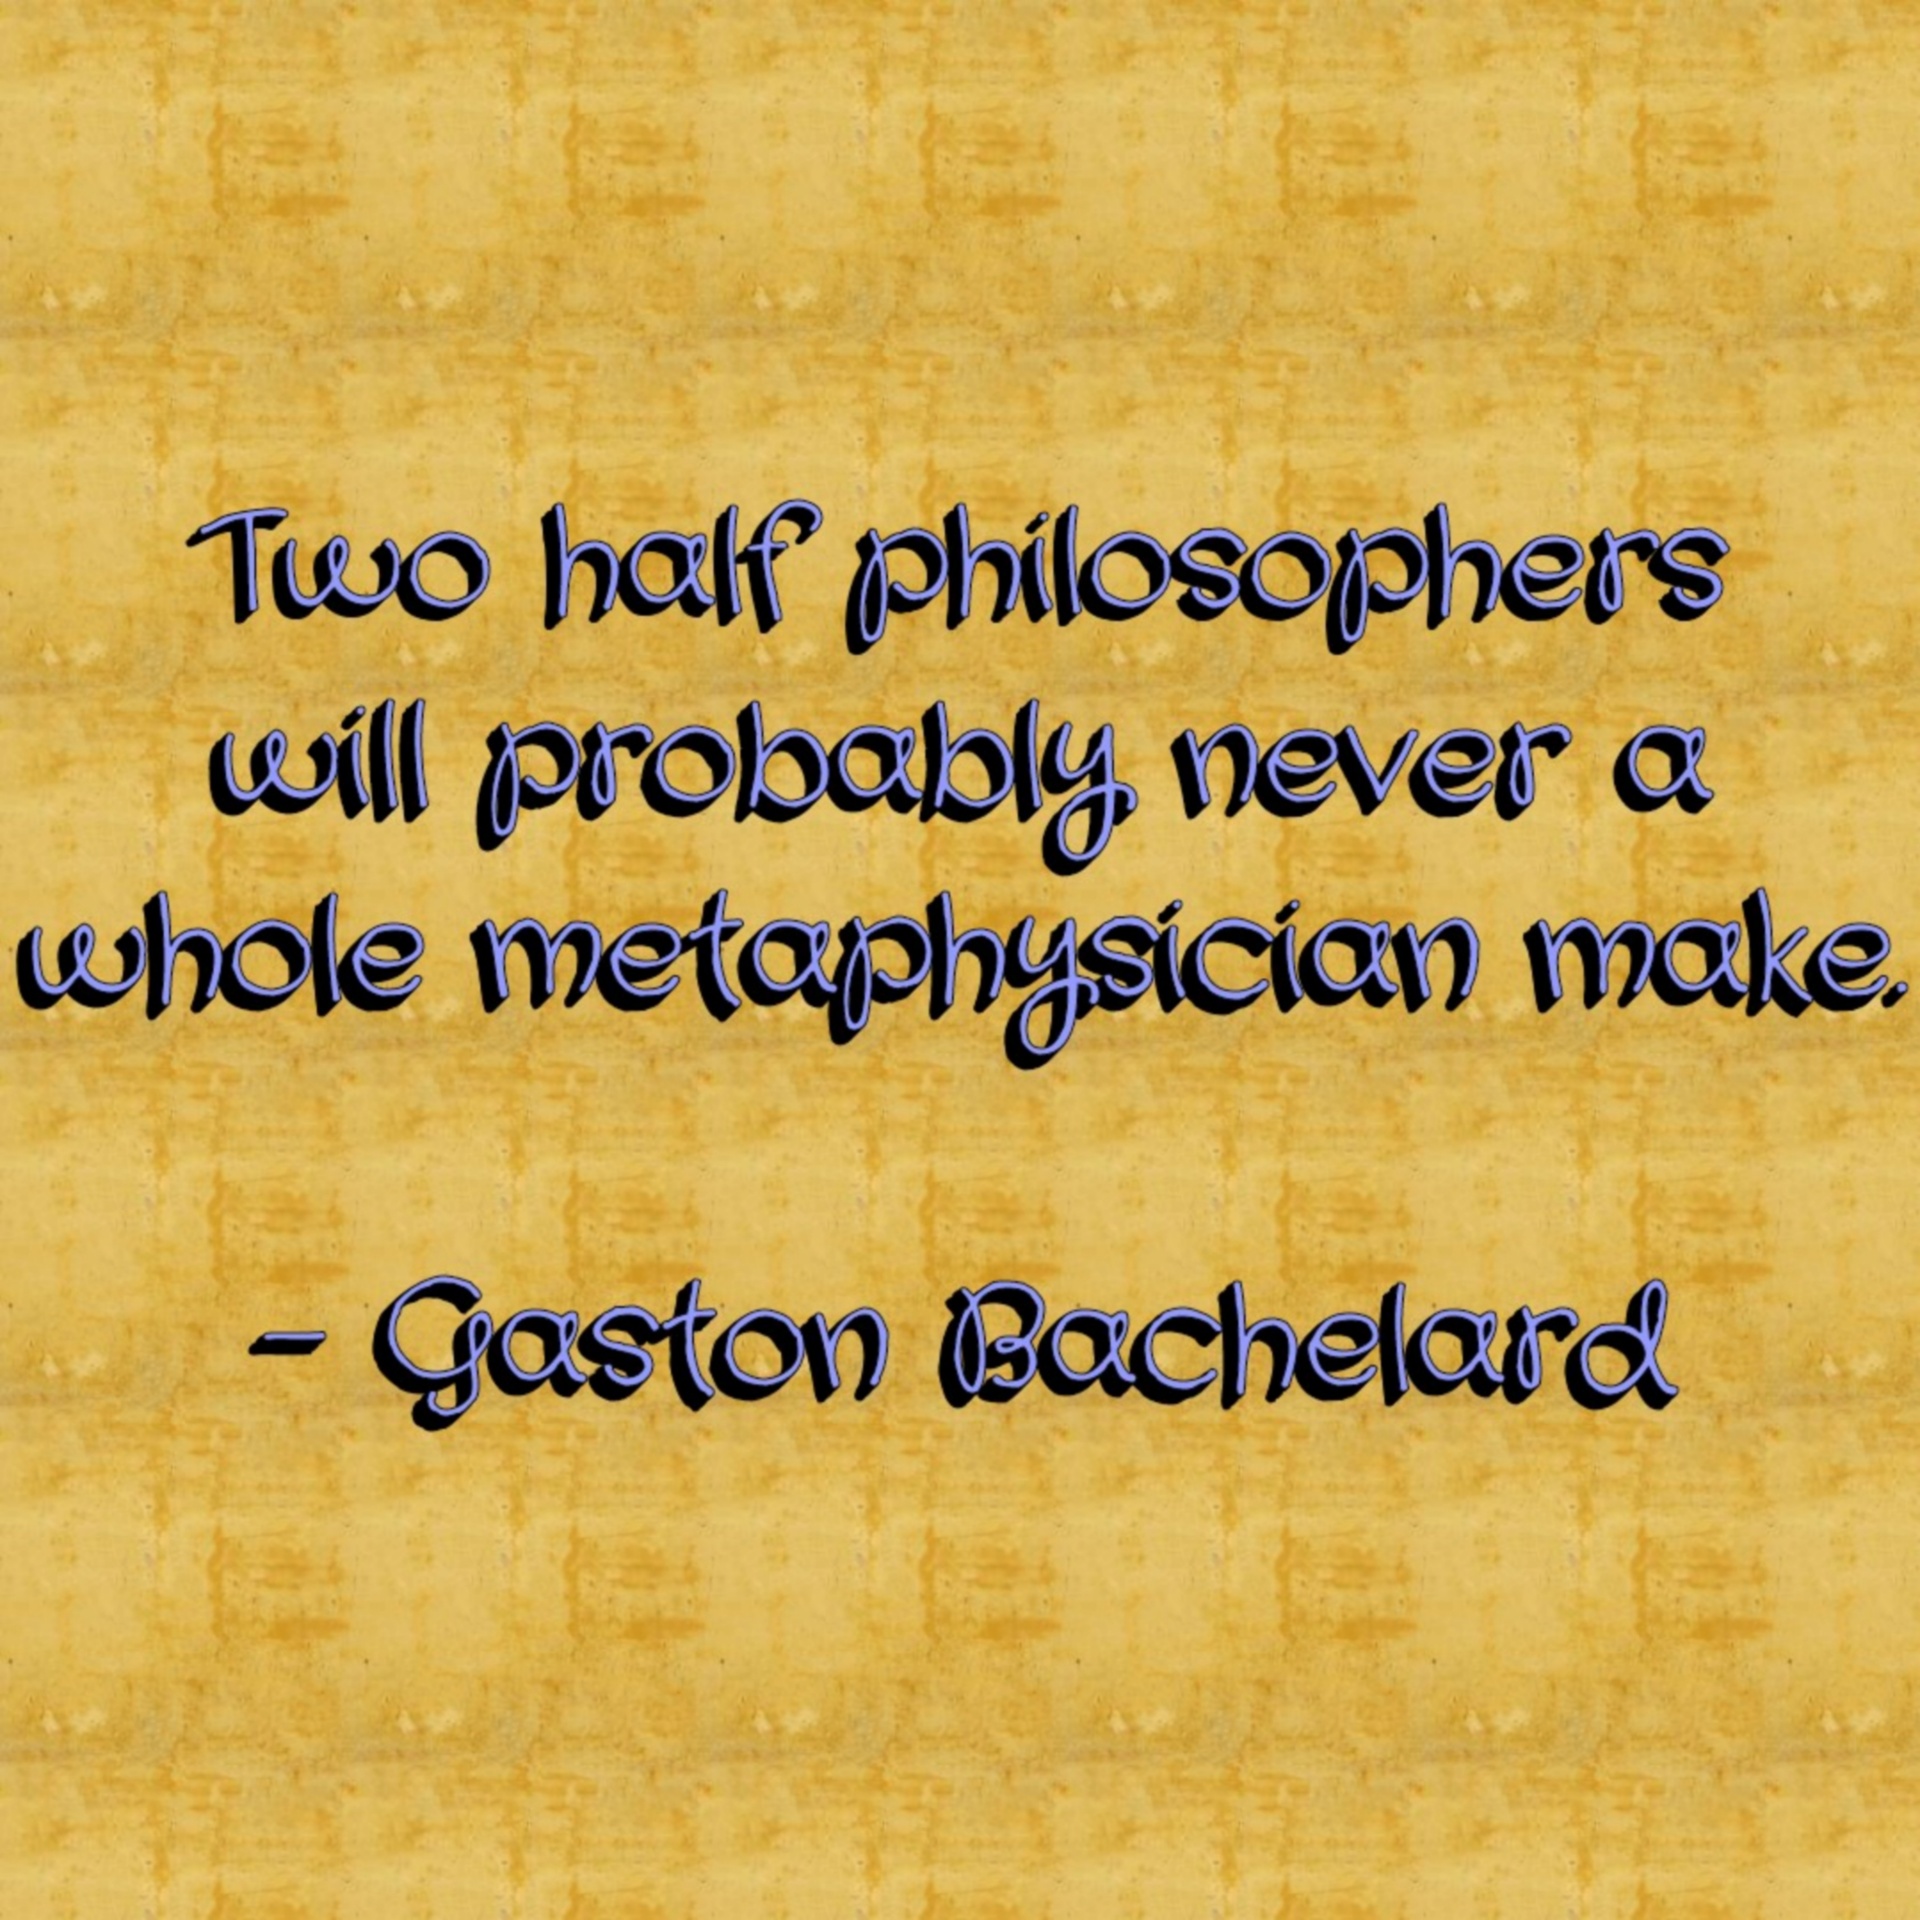 Citaat over filosofen